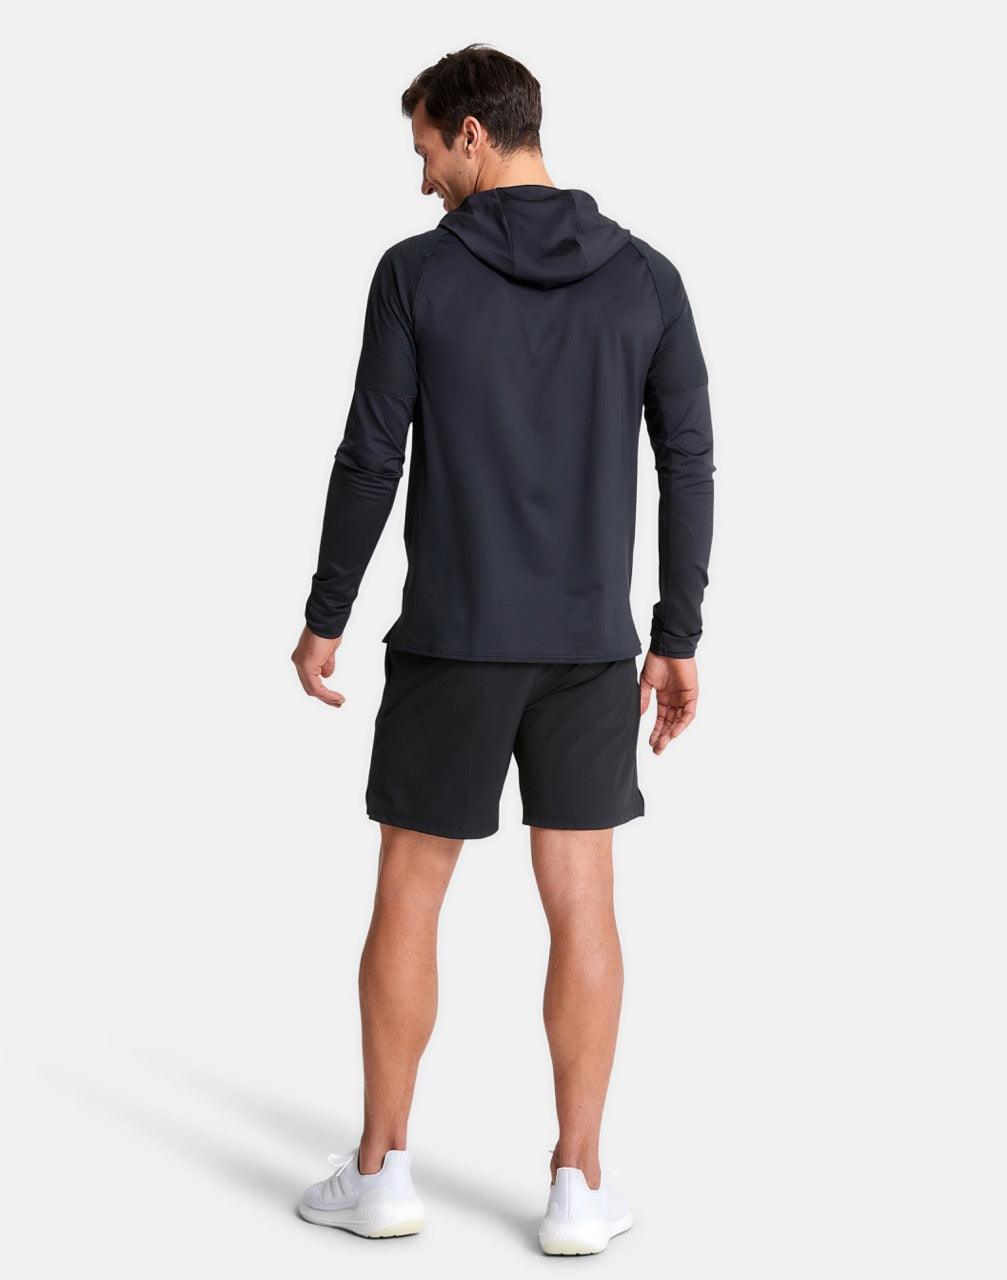 Men's Celero Hooded Long Sleeve in Jet Black - Mid Layer - Gym+Coffee